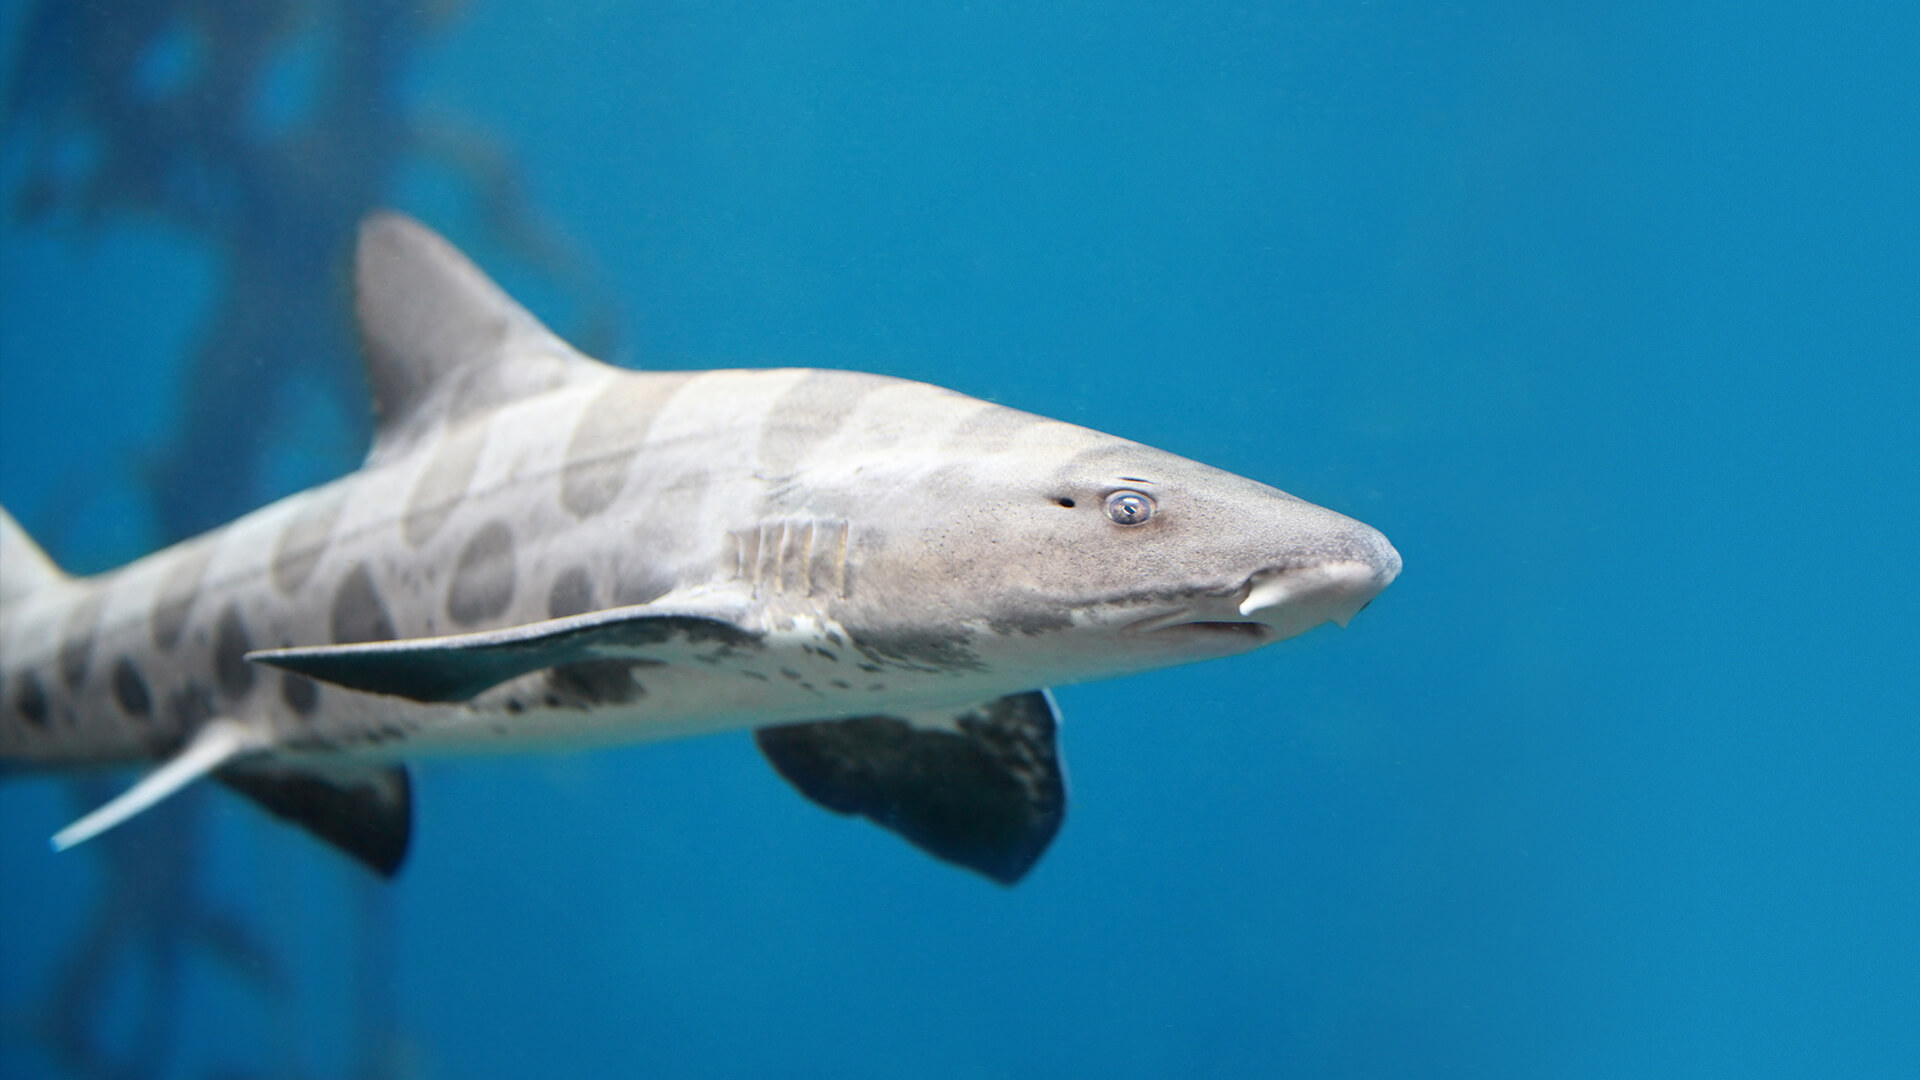 Leopard shark swimming in a blue tank